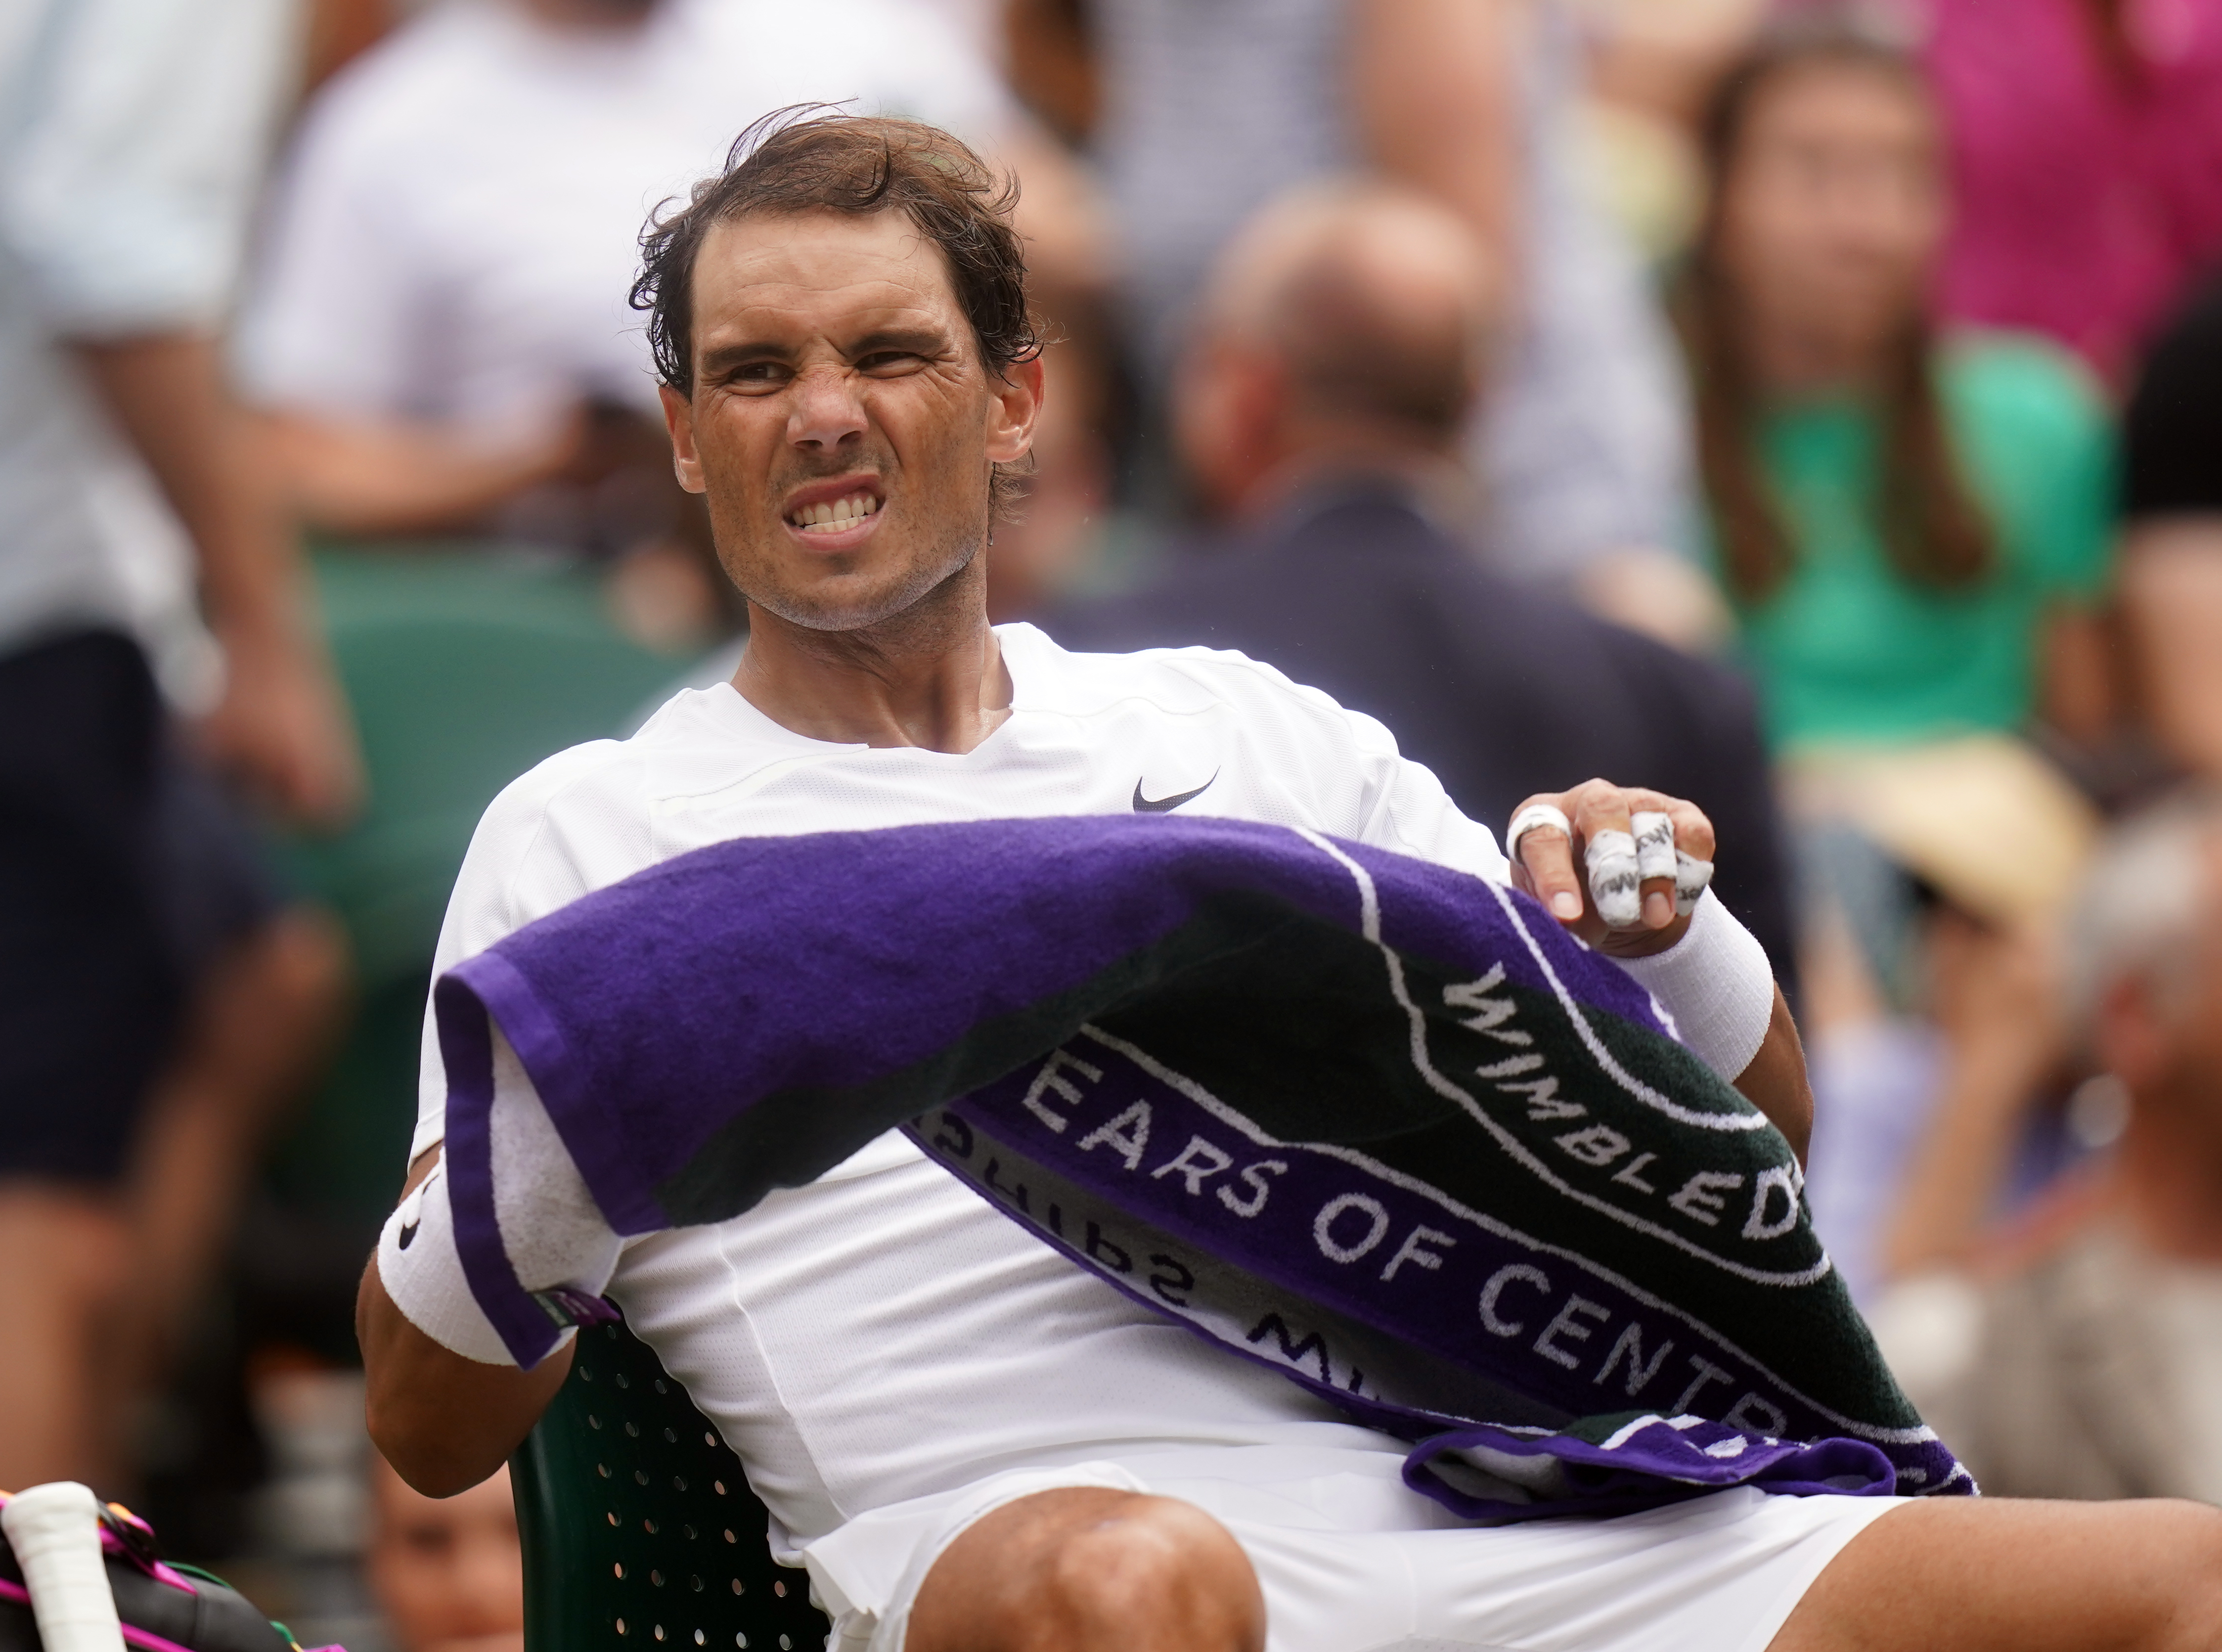 Rafael Nadal had injury problems at Wimbledon last year